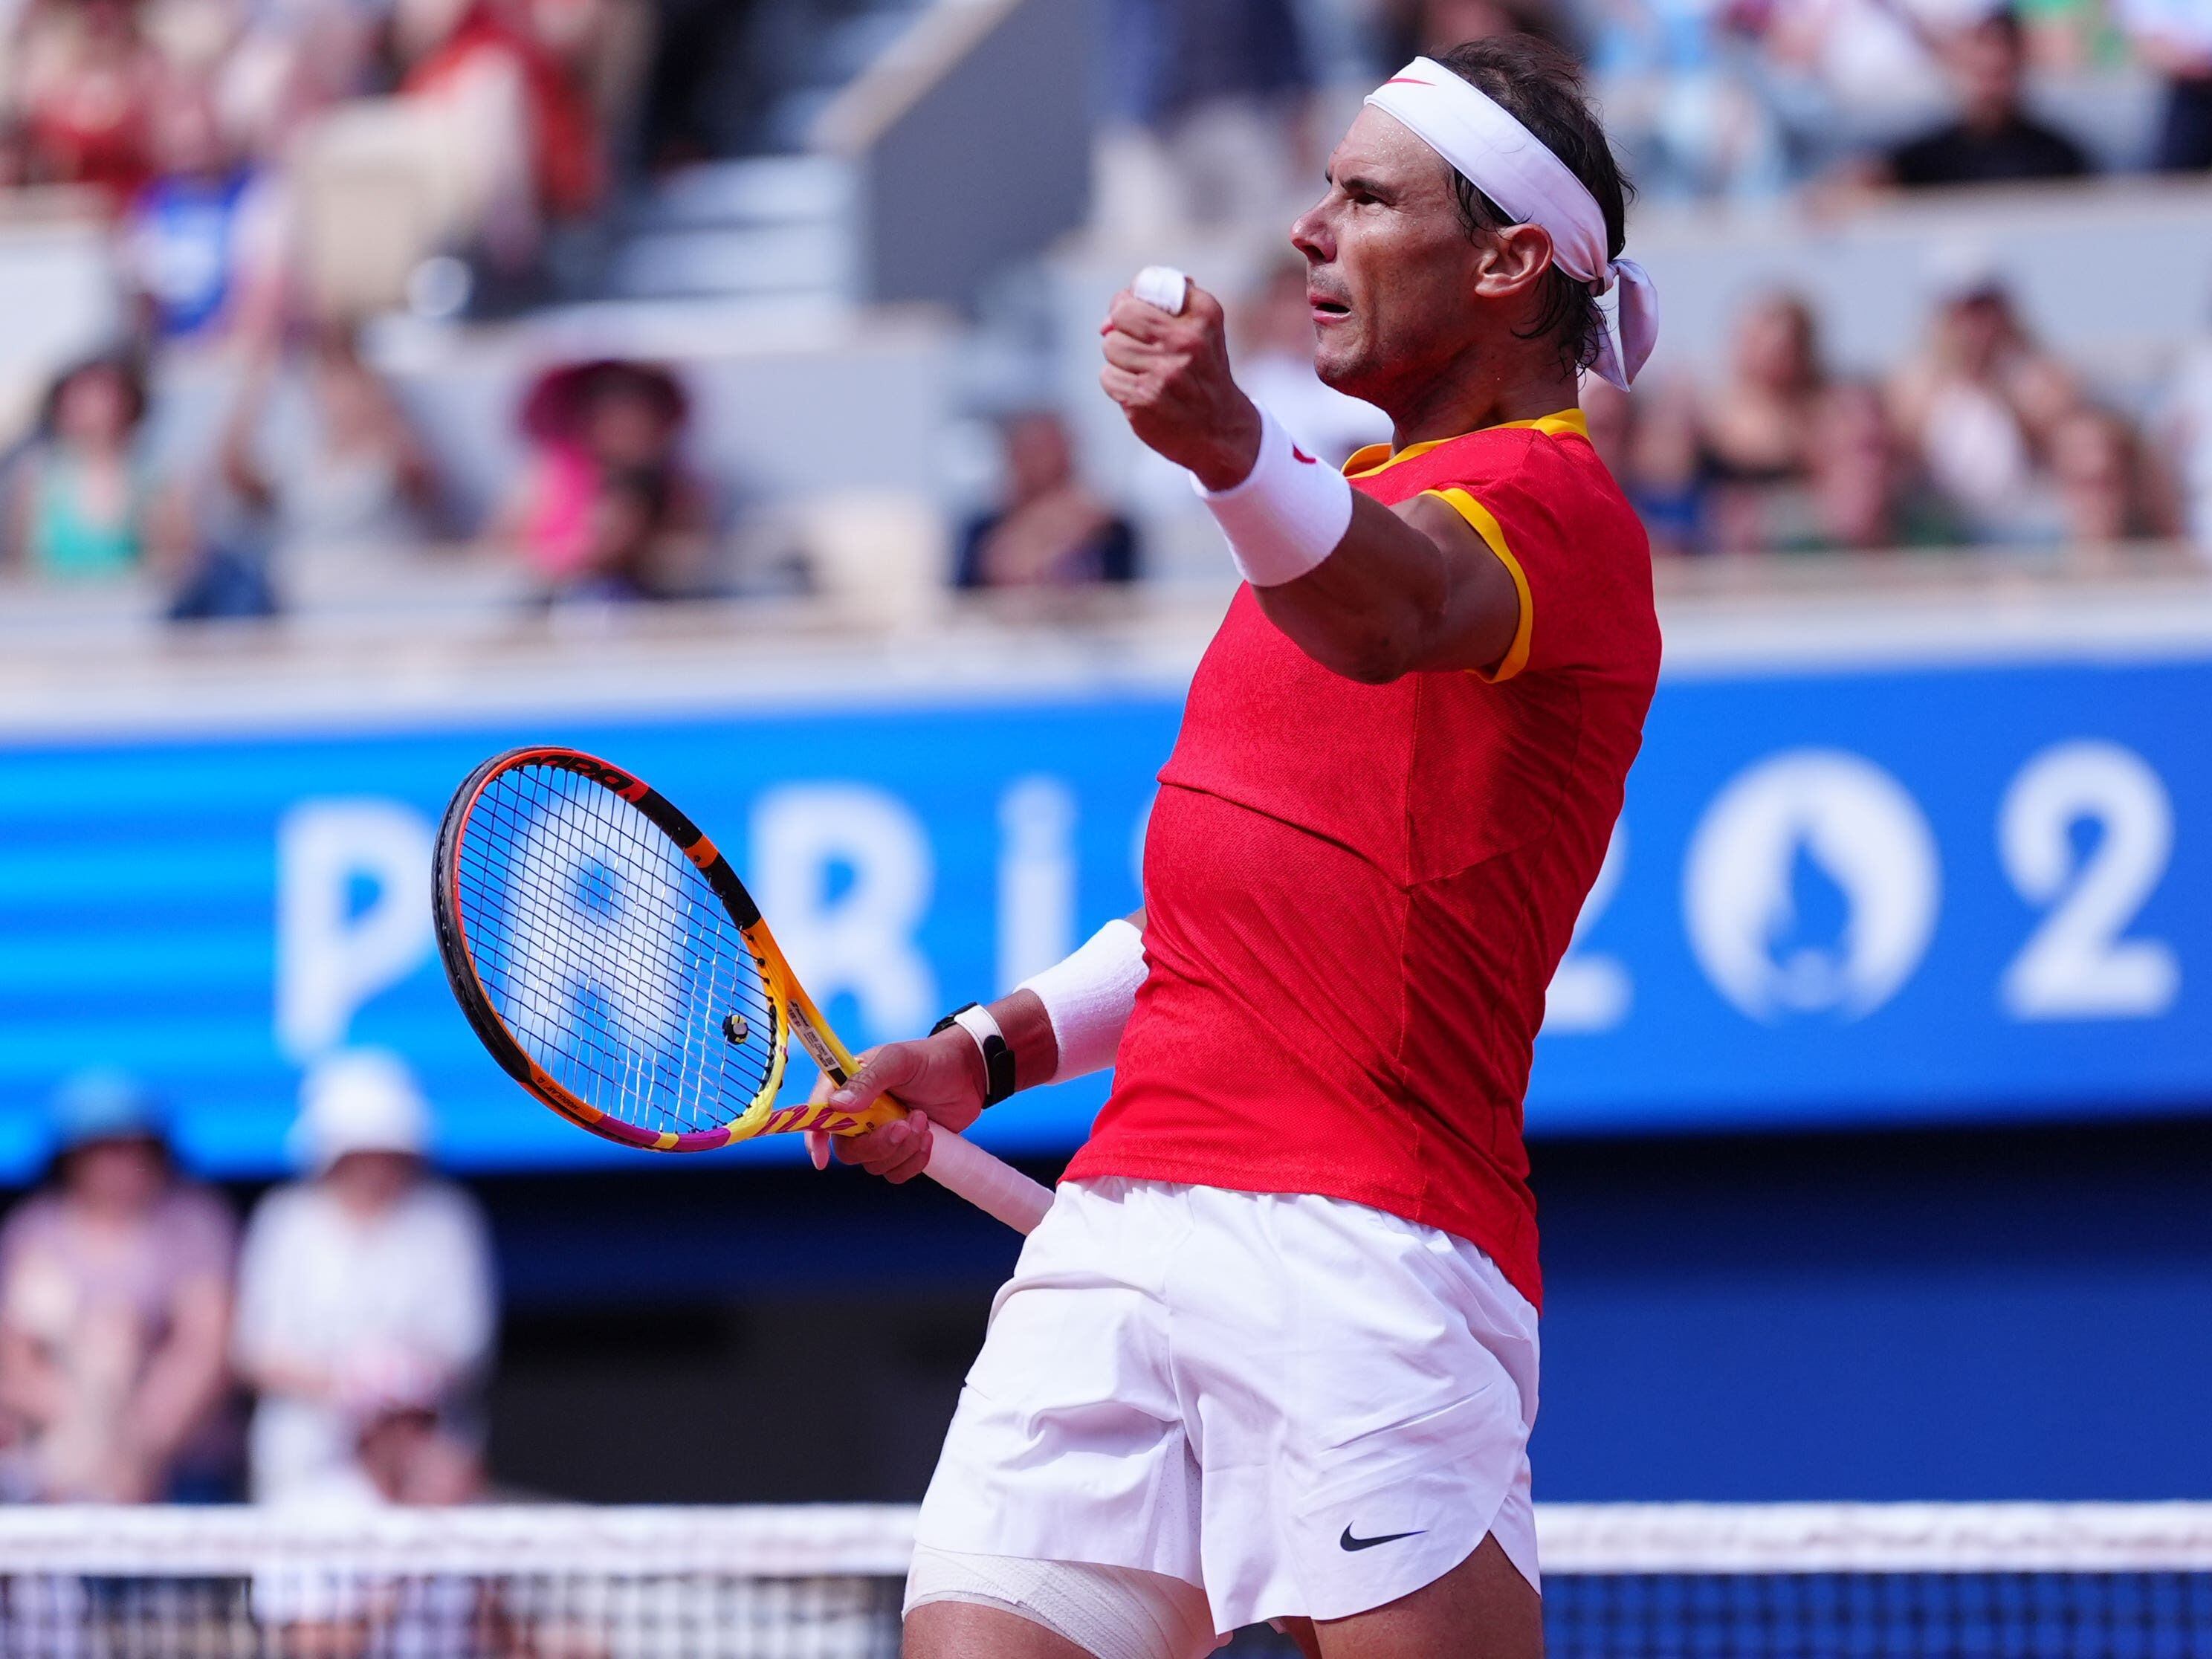 Rafael Nadal plays down hopes of another famous win over Novak Djokovic in Paris